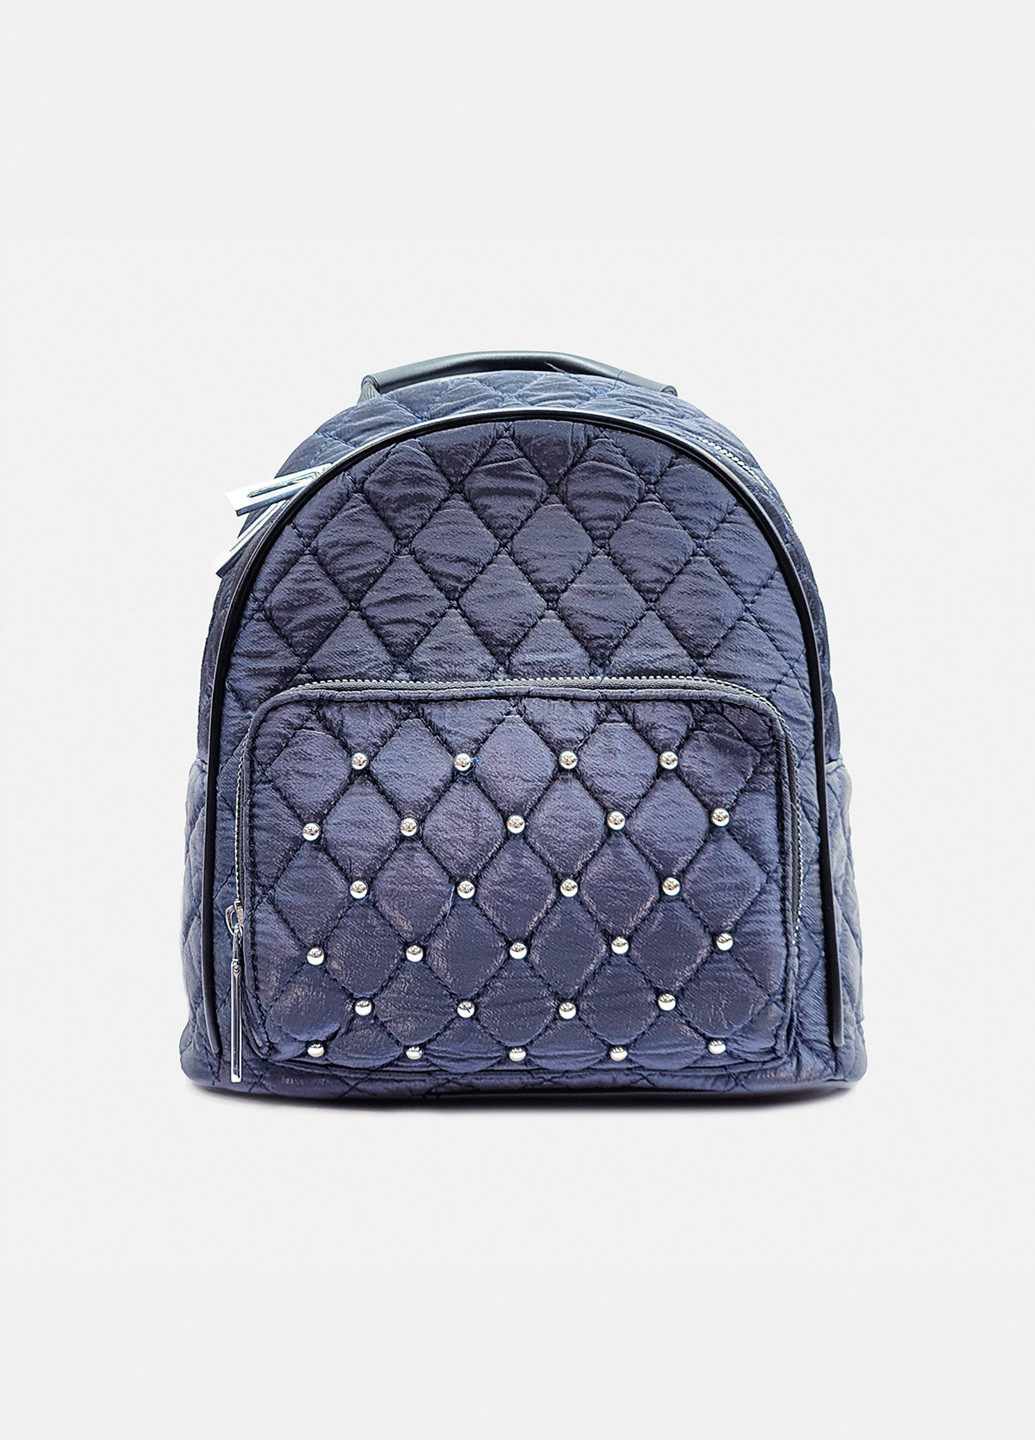 Сумка-рюкзак женская синяя 9329, Fashion (226967496)